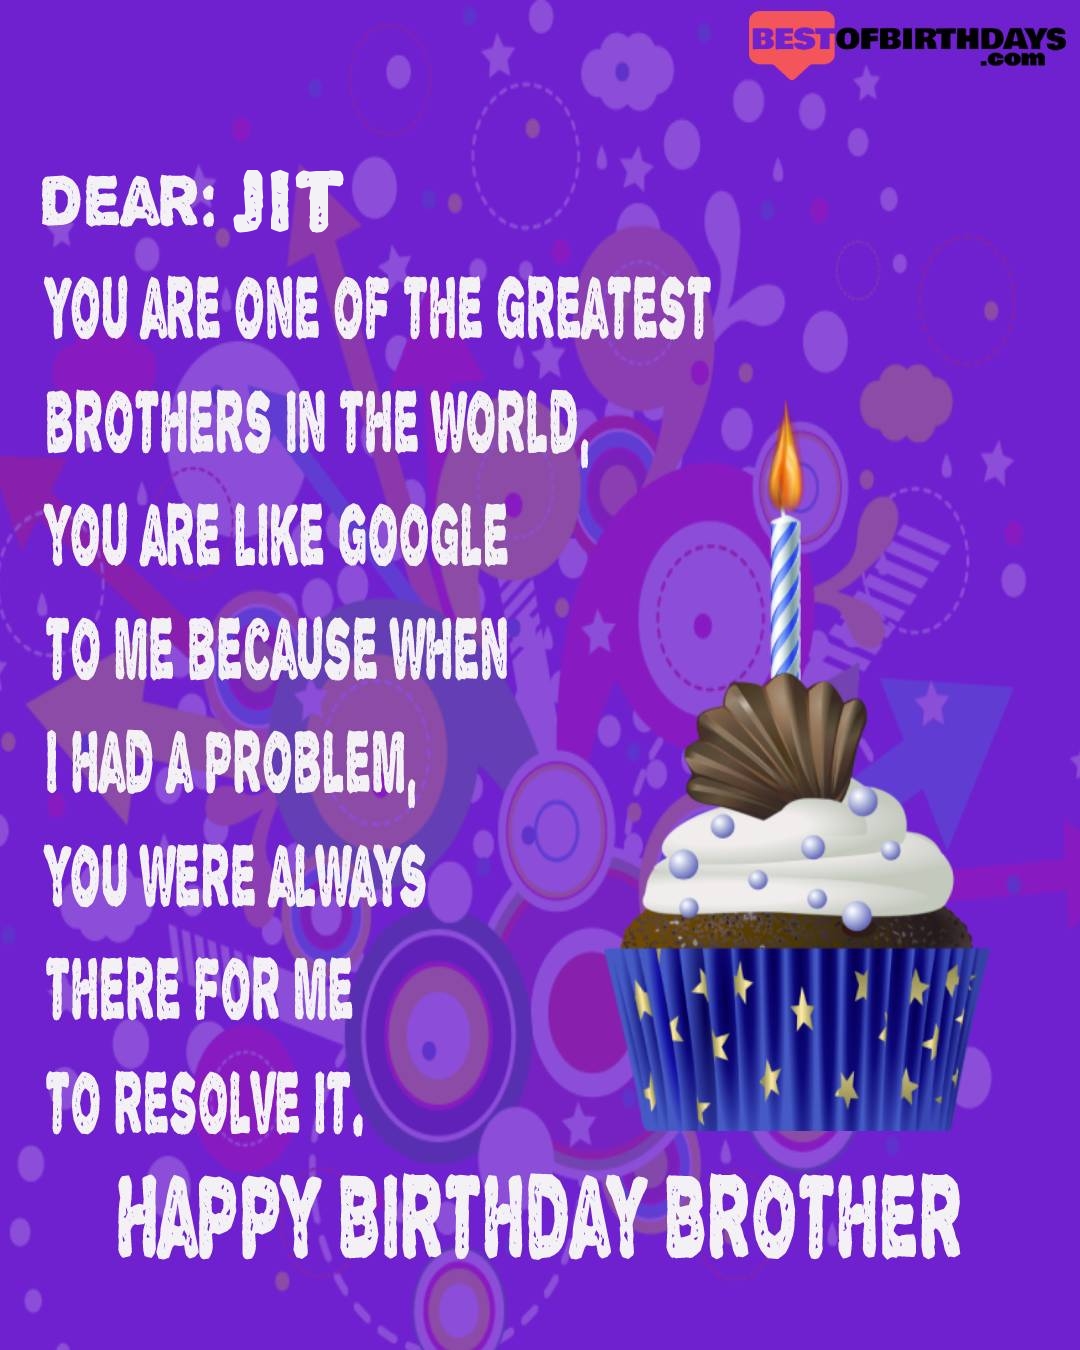 Happy birthday jit bhai brother bro